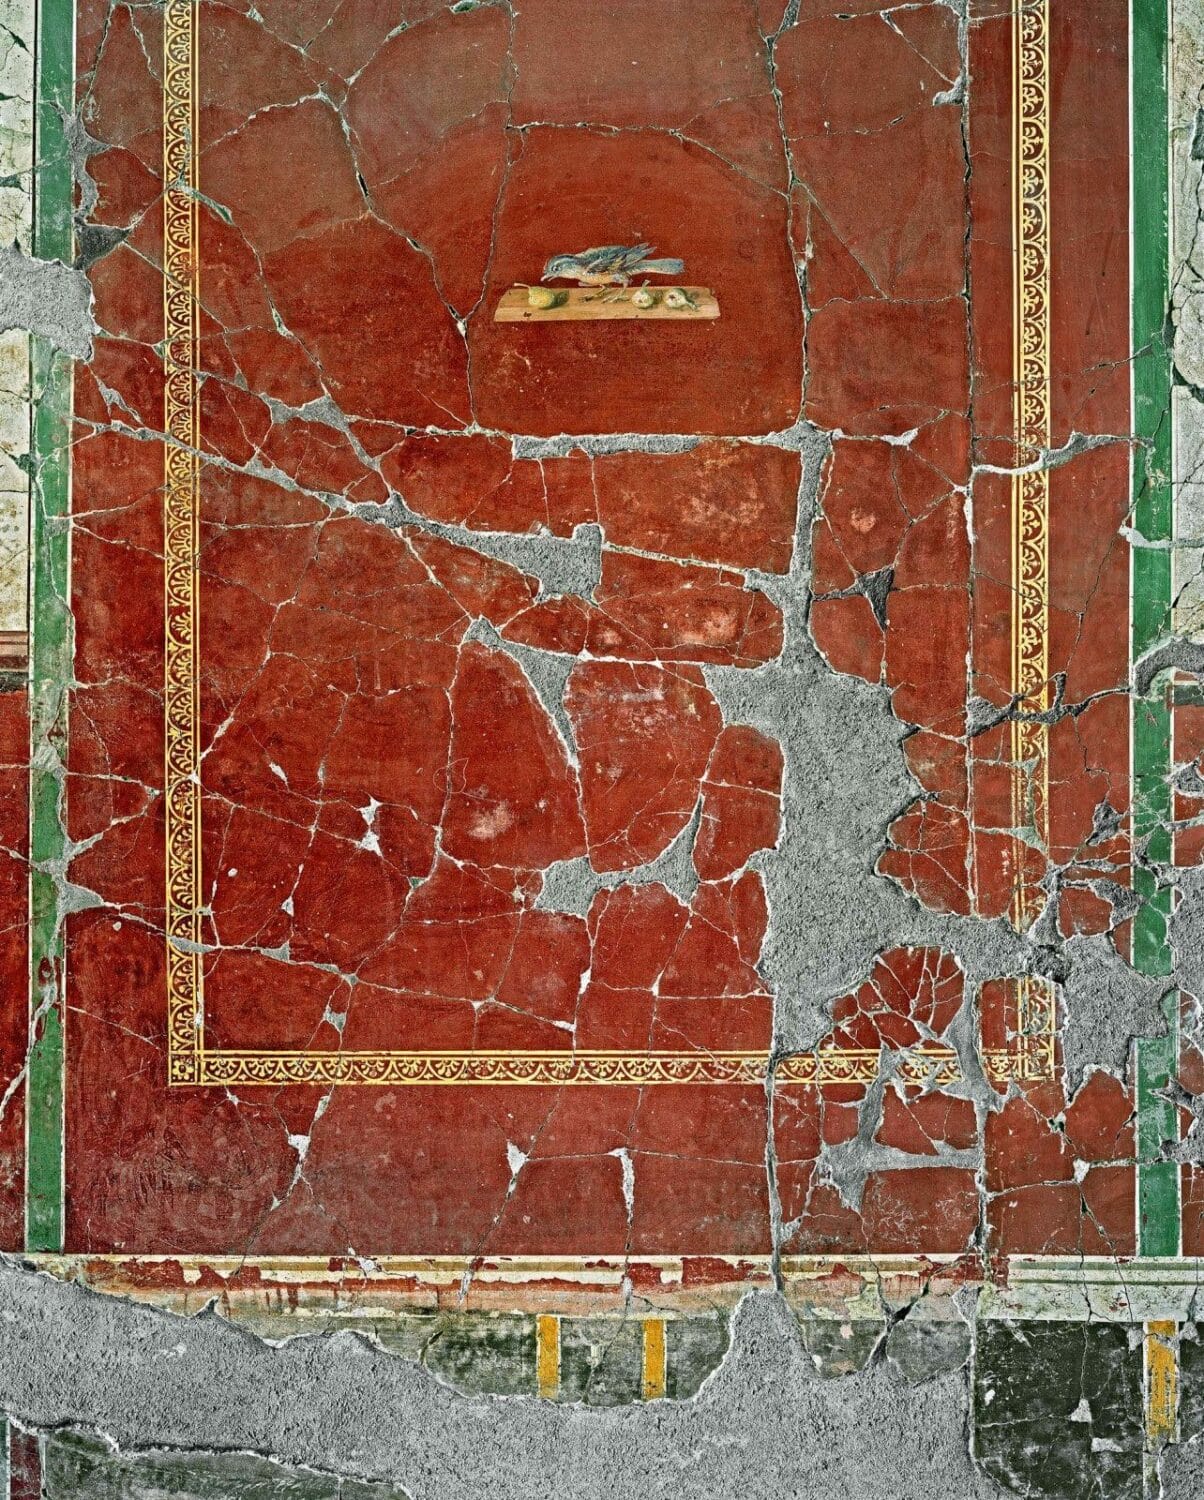 Robert Polidori, Bird and figs fresco panel, Villa Poppaea, Oplontis, Italia, 2017, archival pigment print mounted to Dibond. Courtesy of the artist.